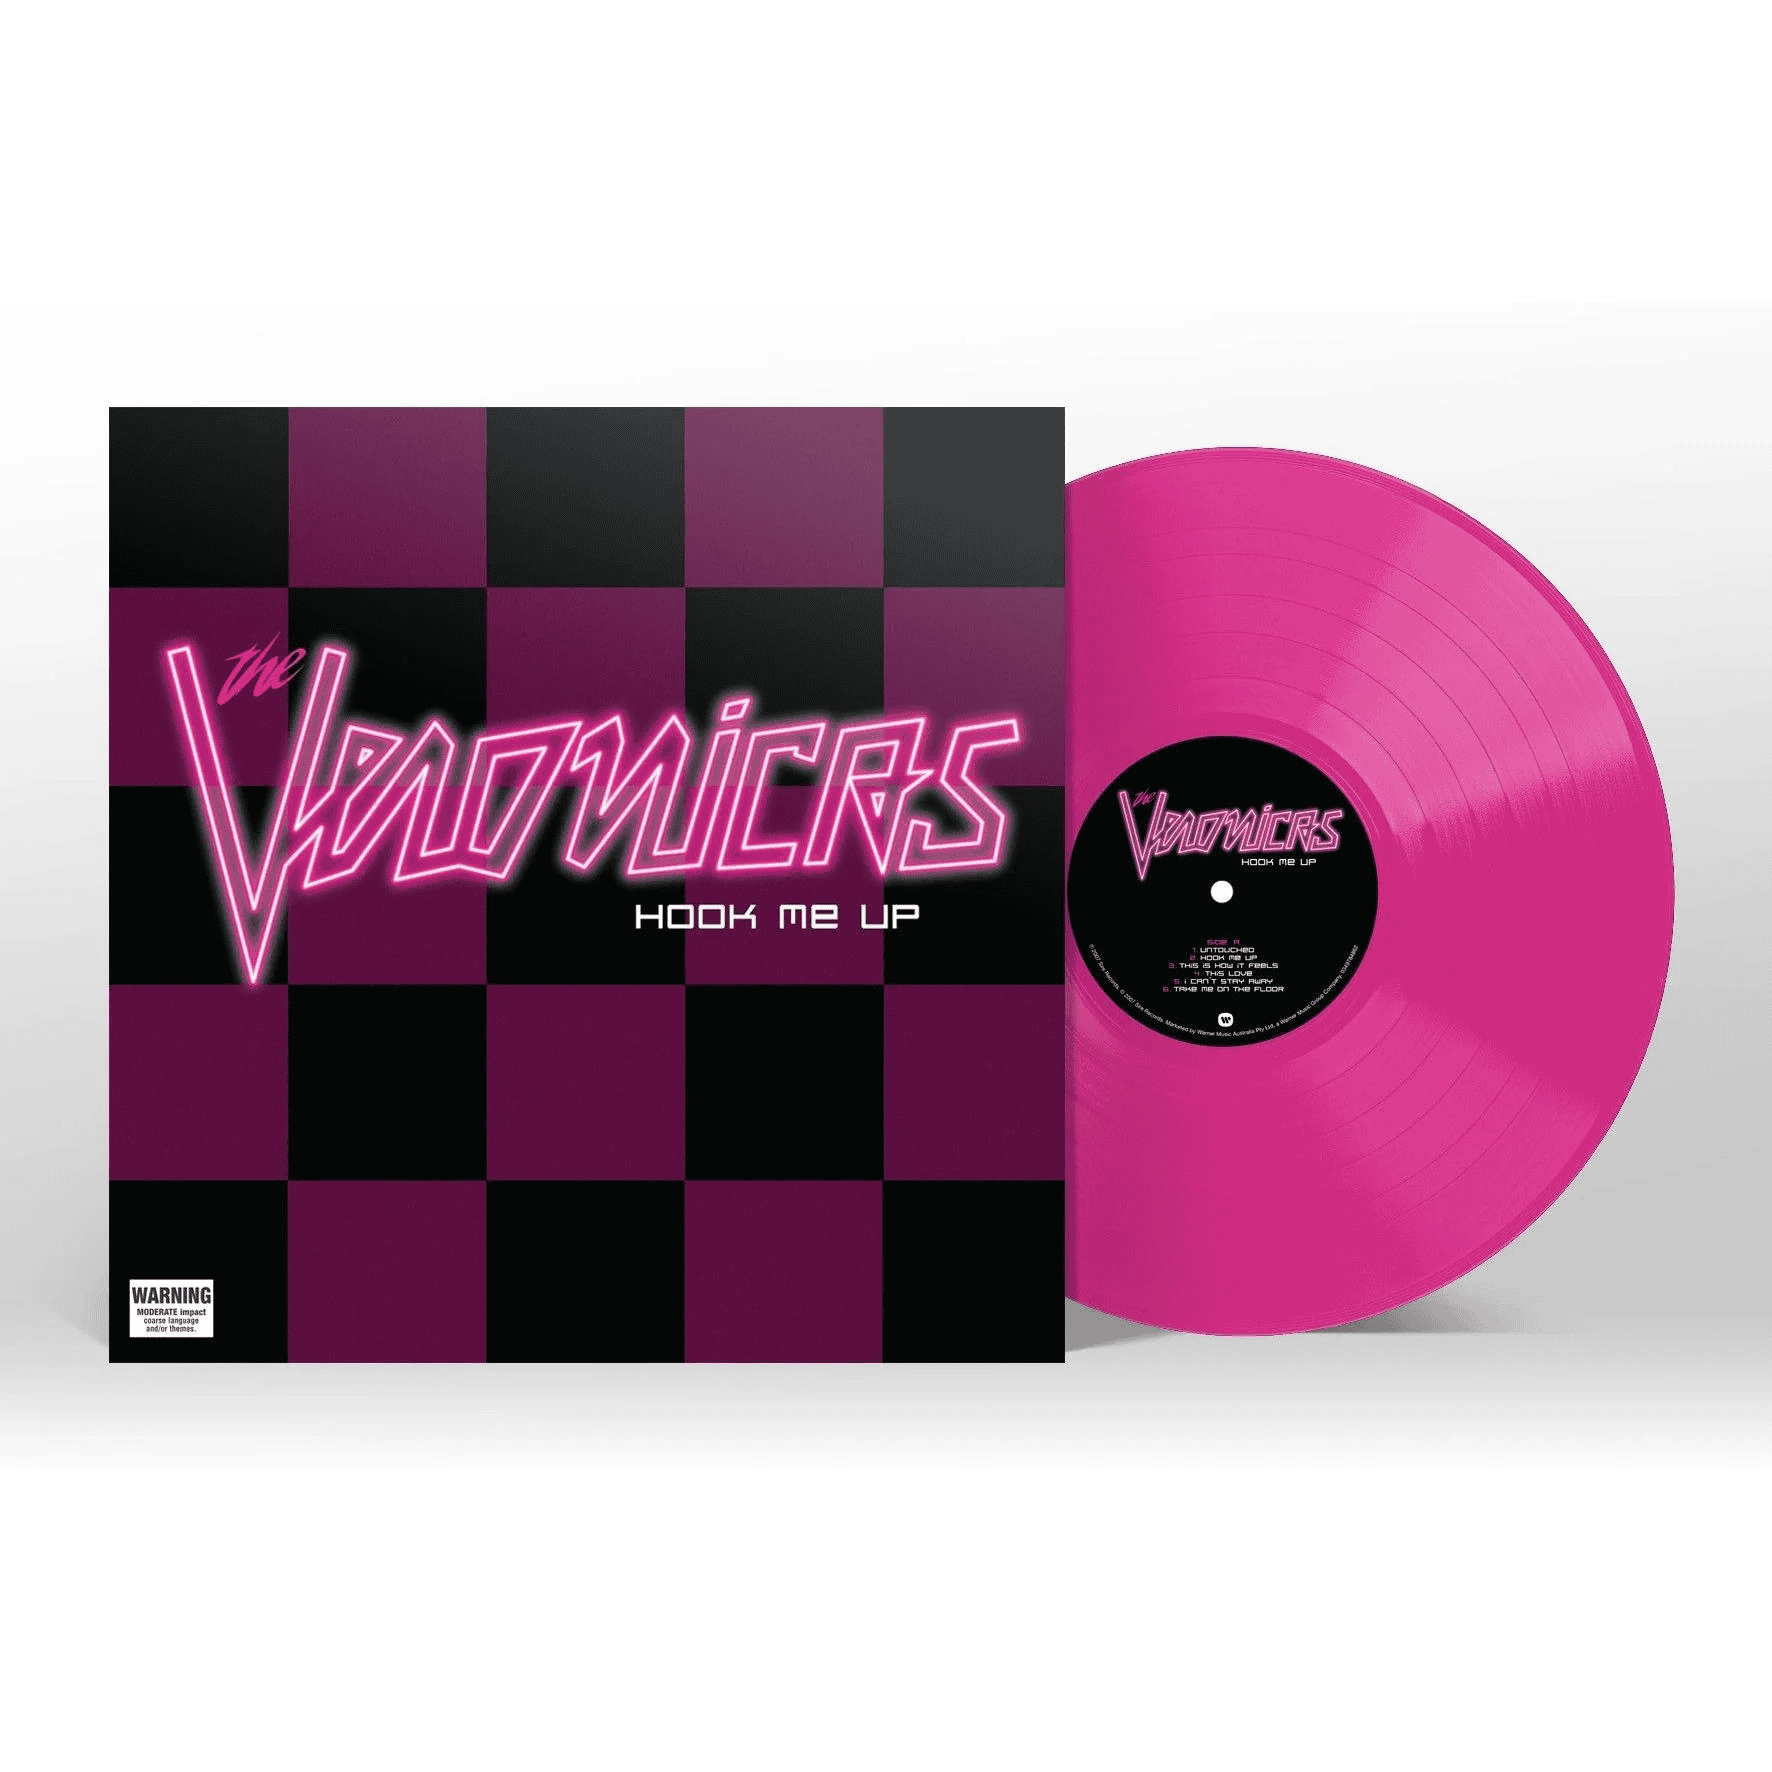 THE VERONICAS - Hook Me Up Vinyl